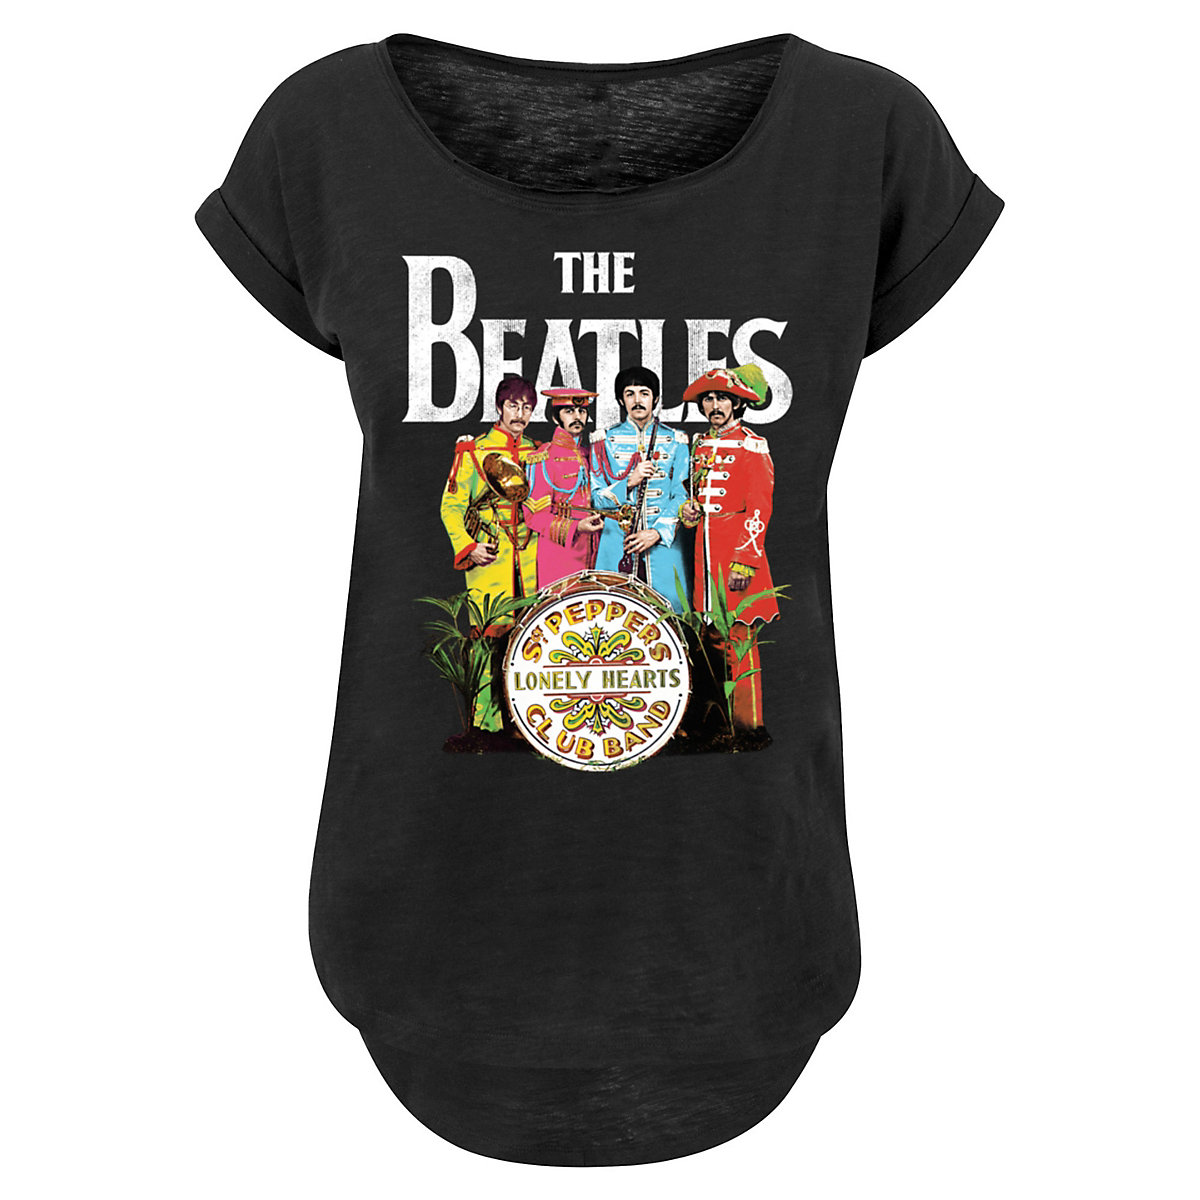 F4NT4STIC The Beatles Band Sgt Pepper Black T-Shirts schwarz